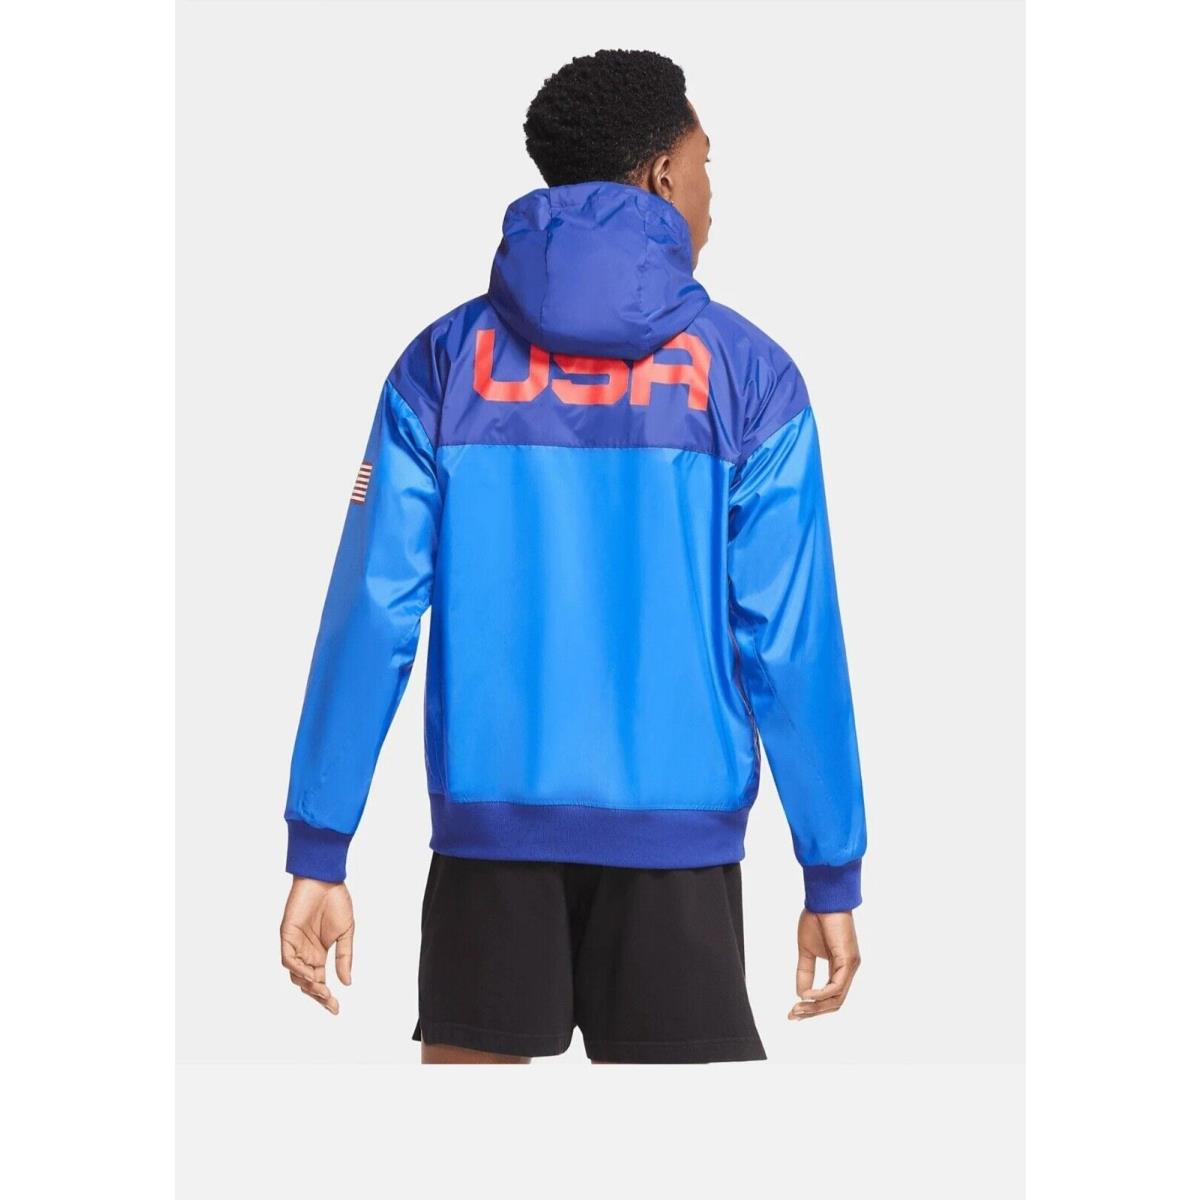 Nike Sportswear Team Usa Windrunner Blue Olympic Jacket CK5813-455 Size L